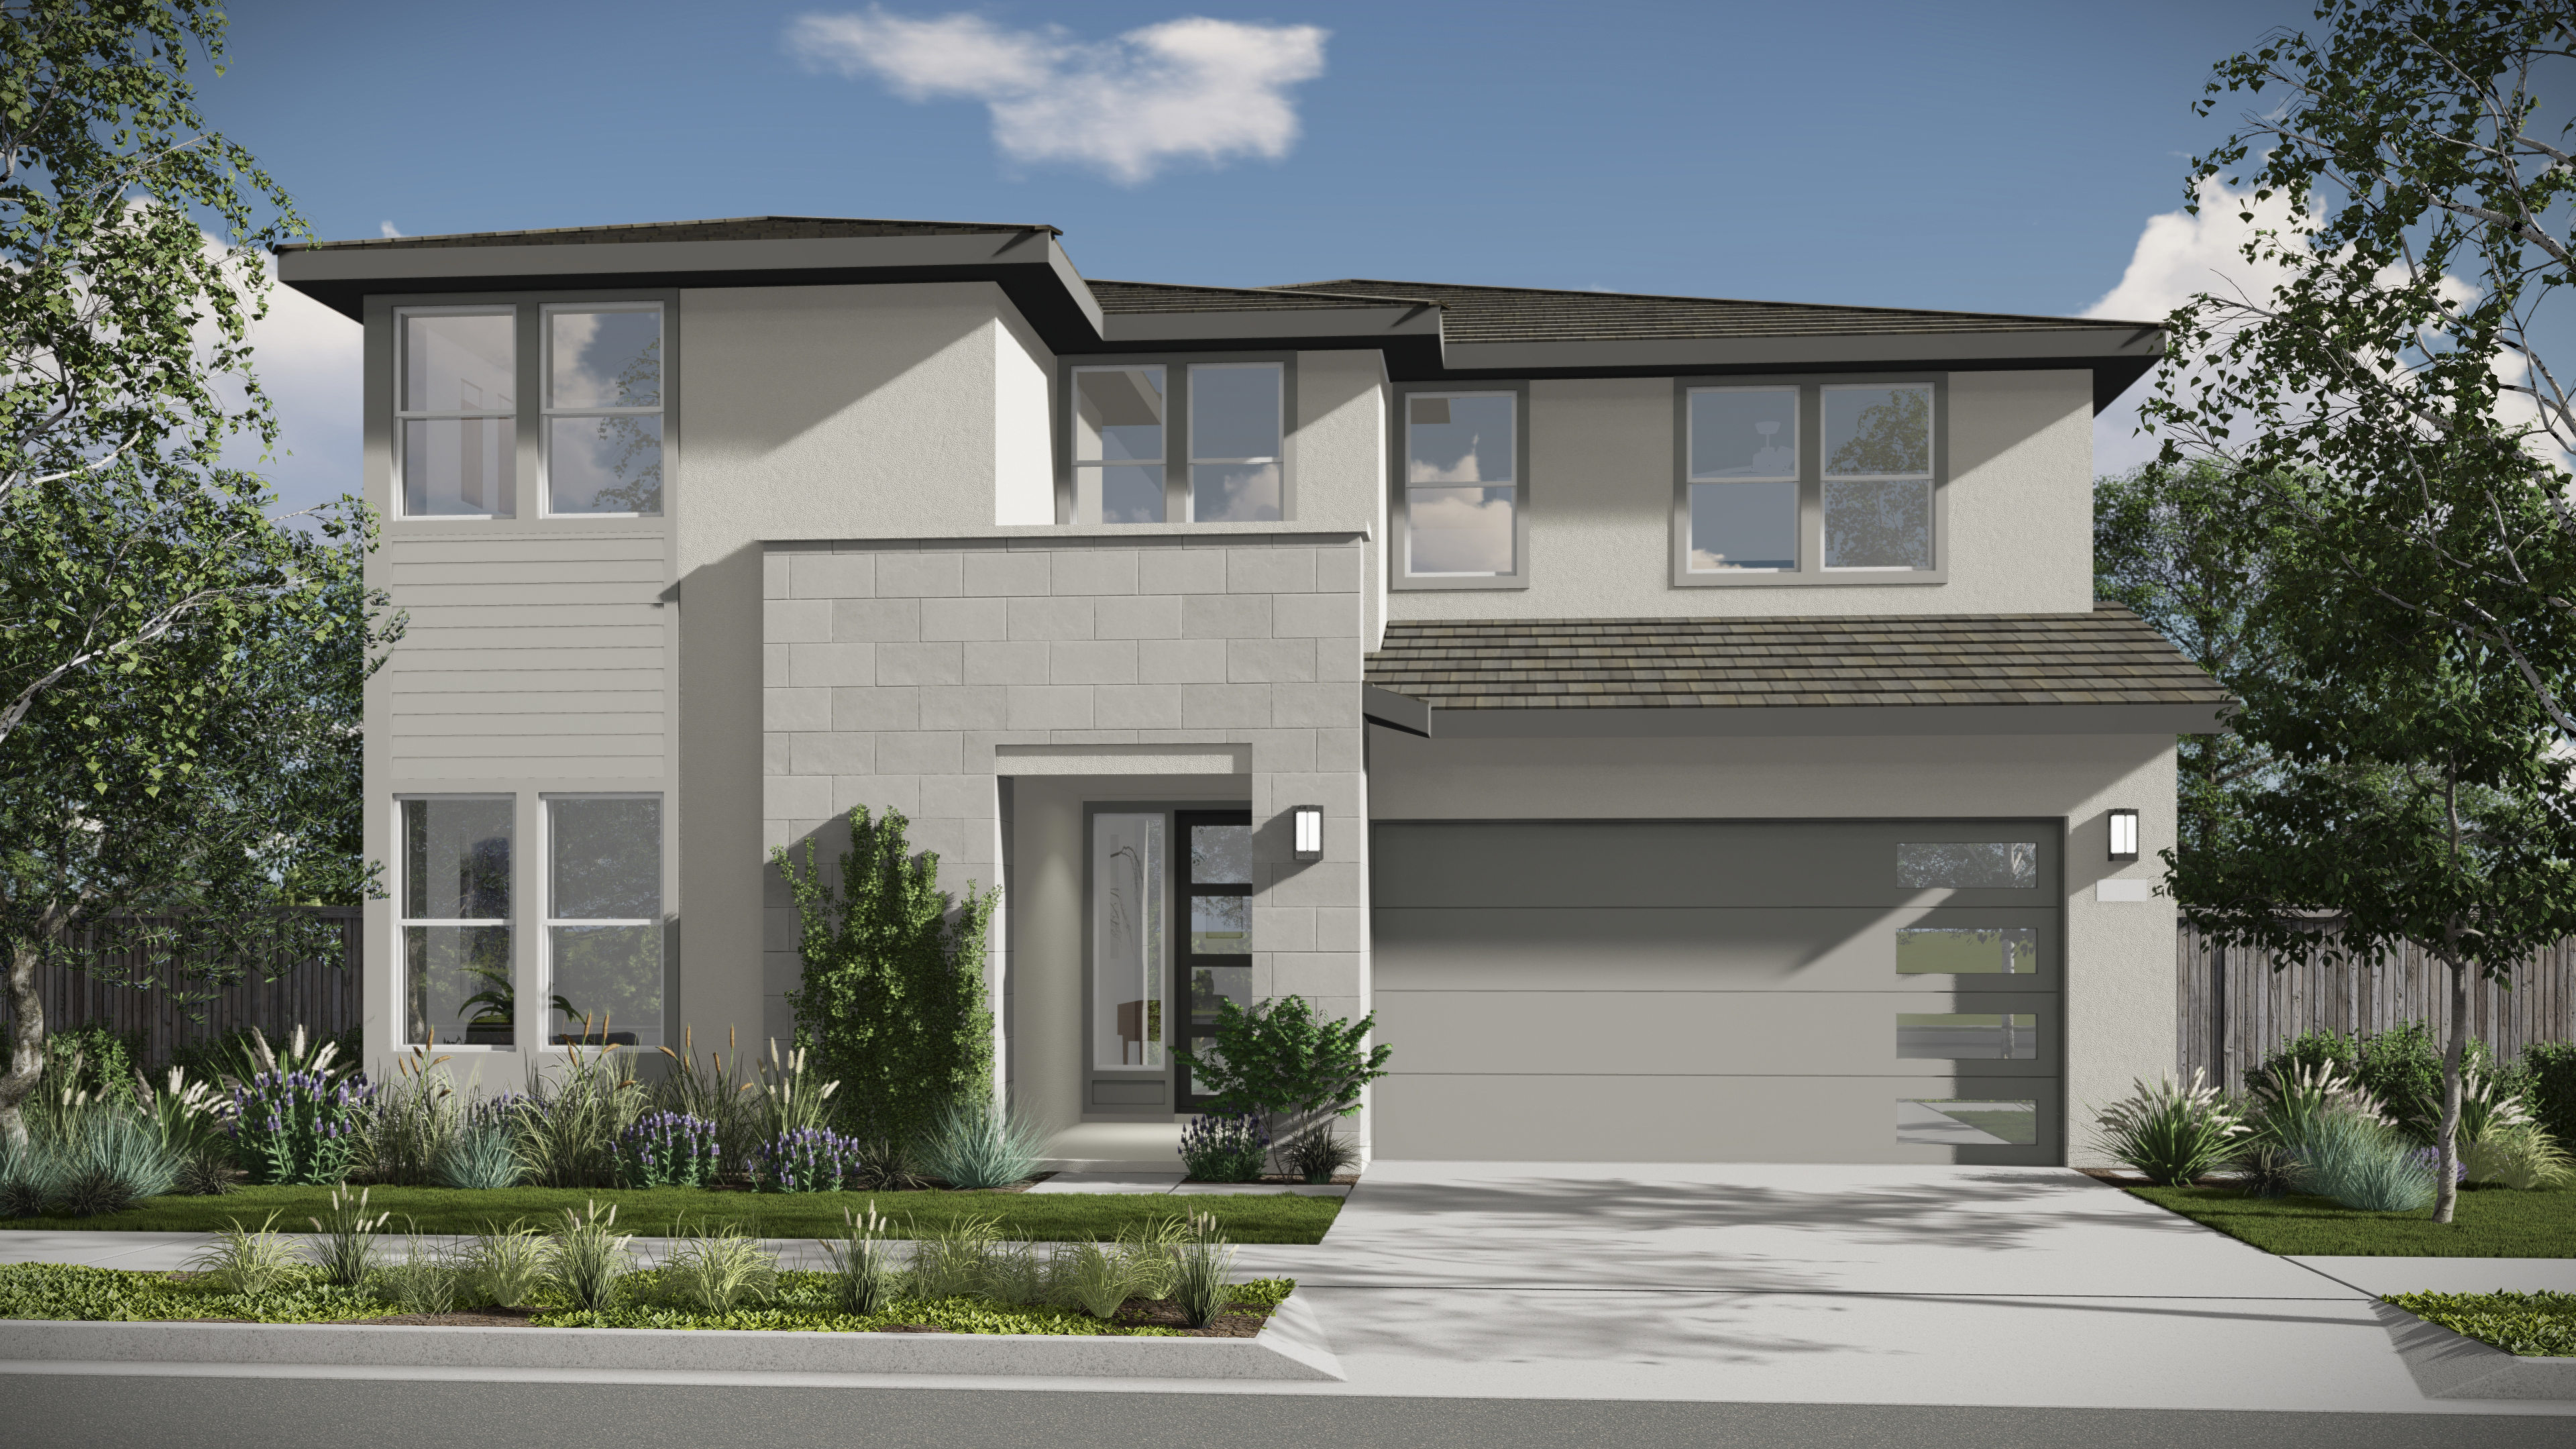 Kiper Homes Announces Home Designs for New River Islands Community 